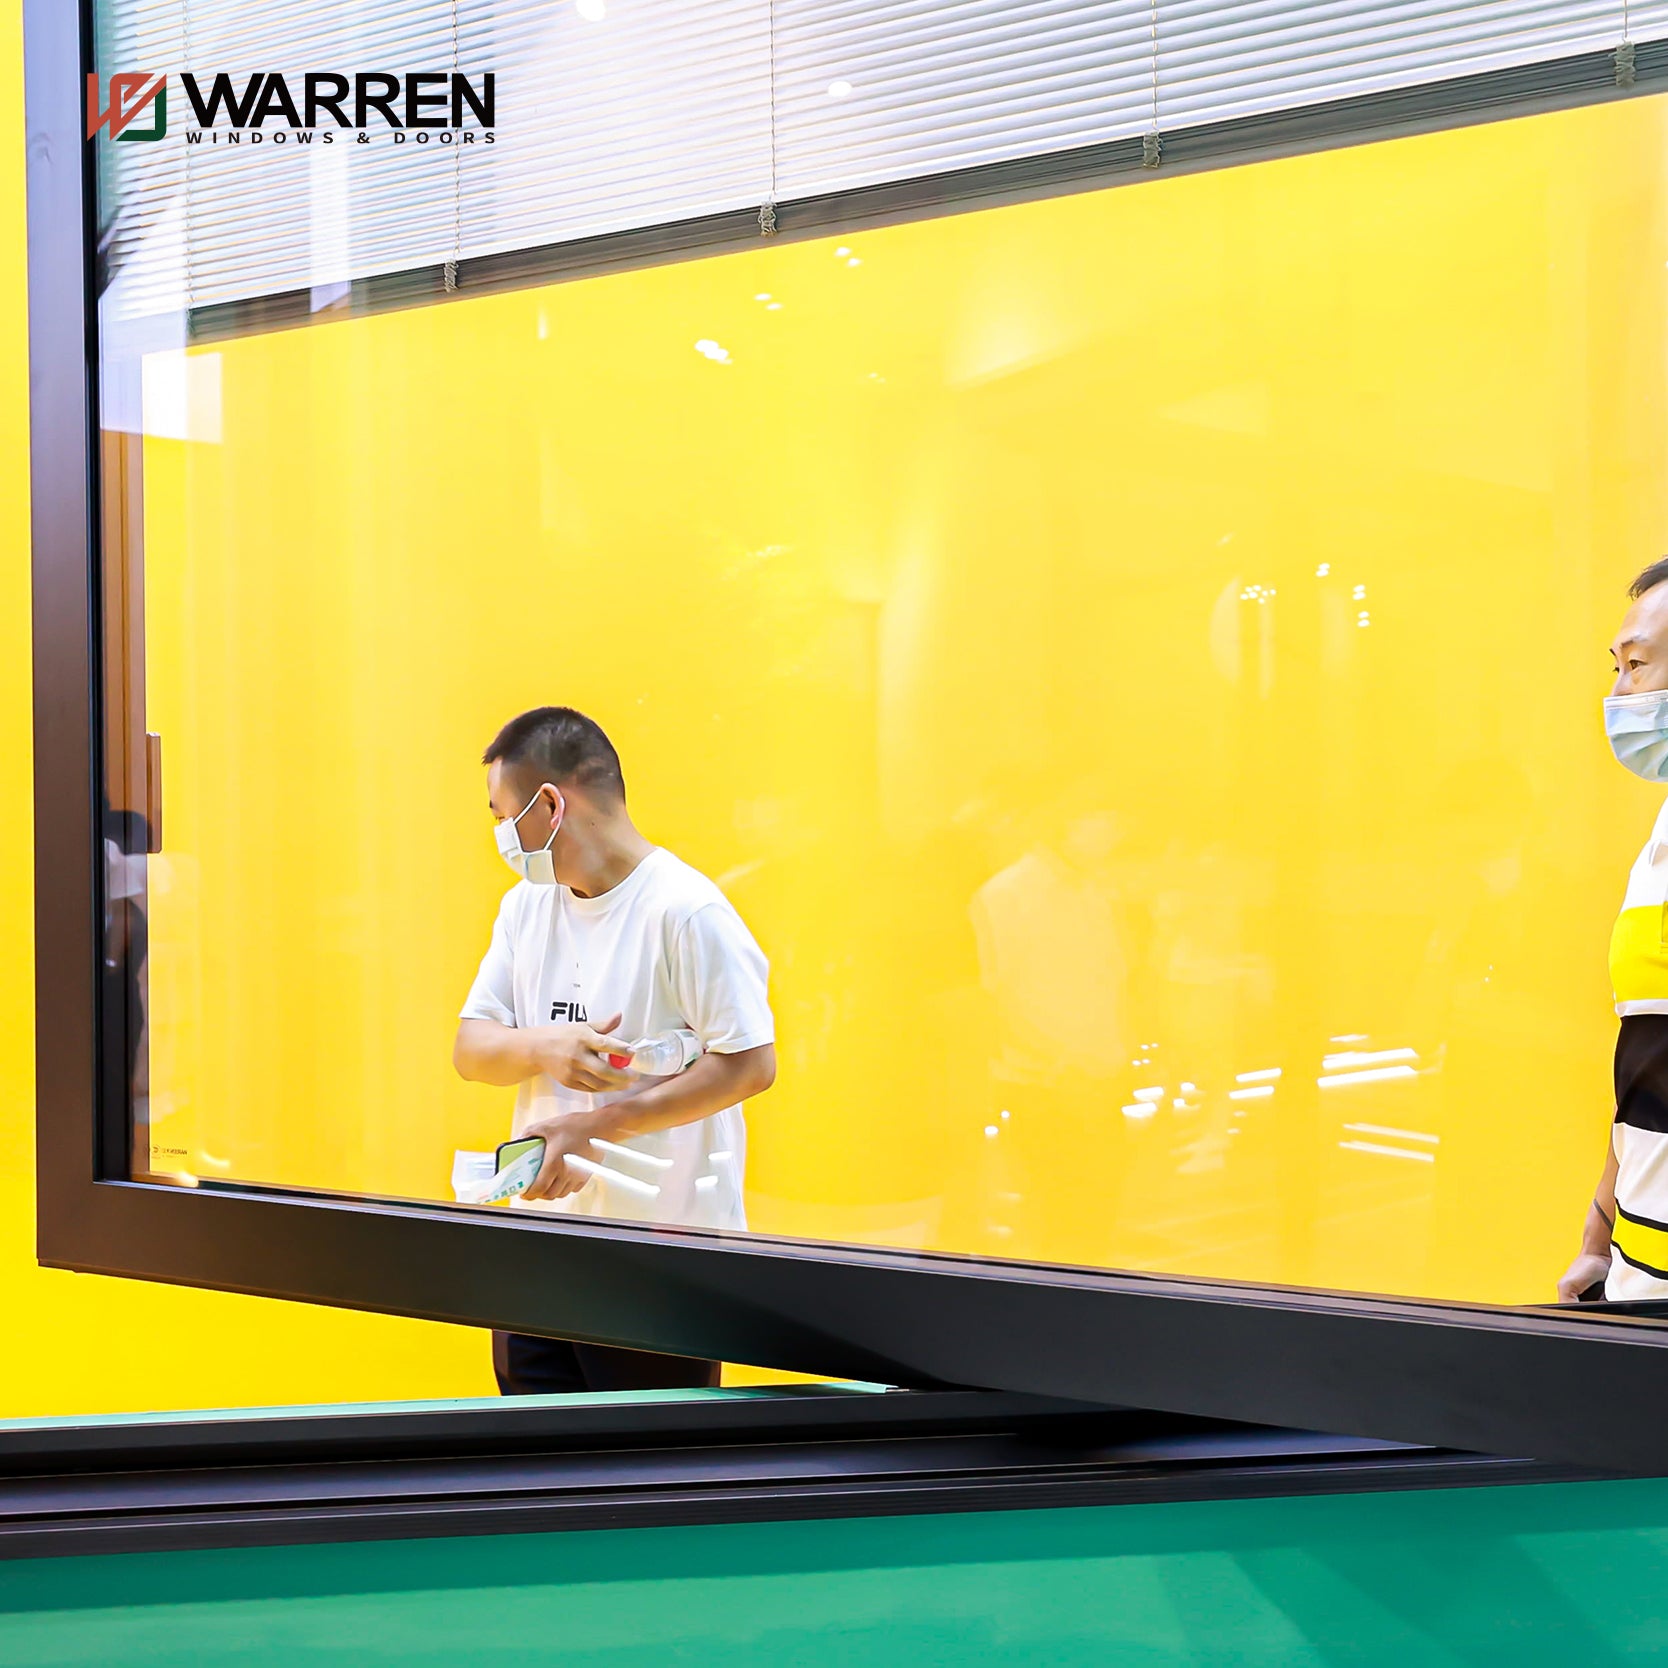 Warren China High Quality Double Glazed L Design Window Aluminum Horizontal Pivoted Middle Hung Window